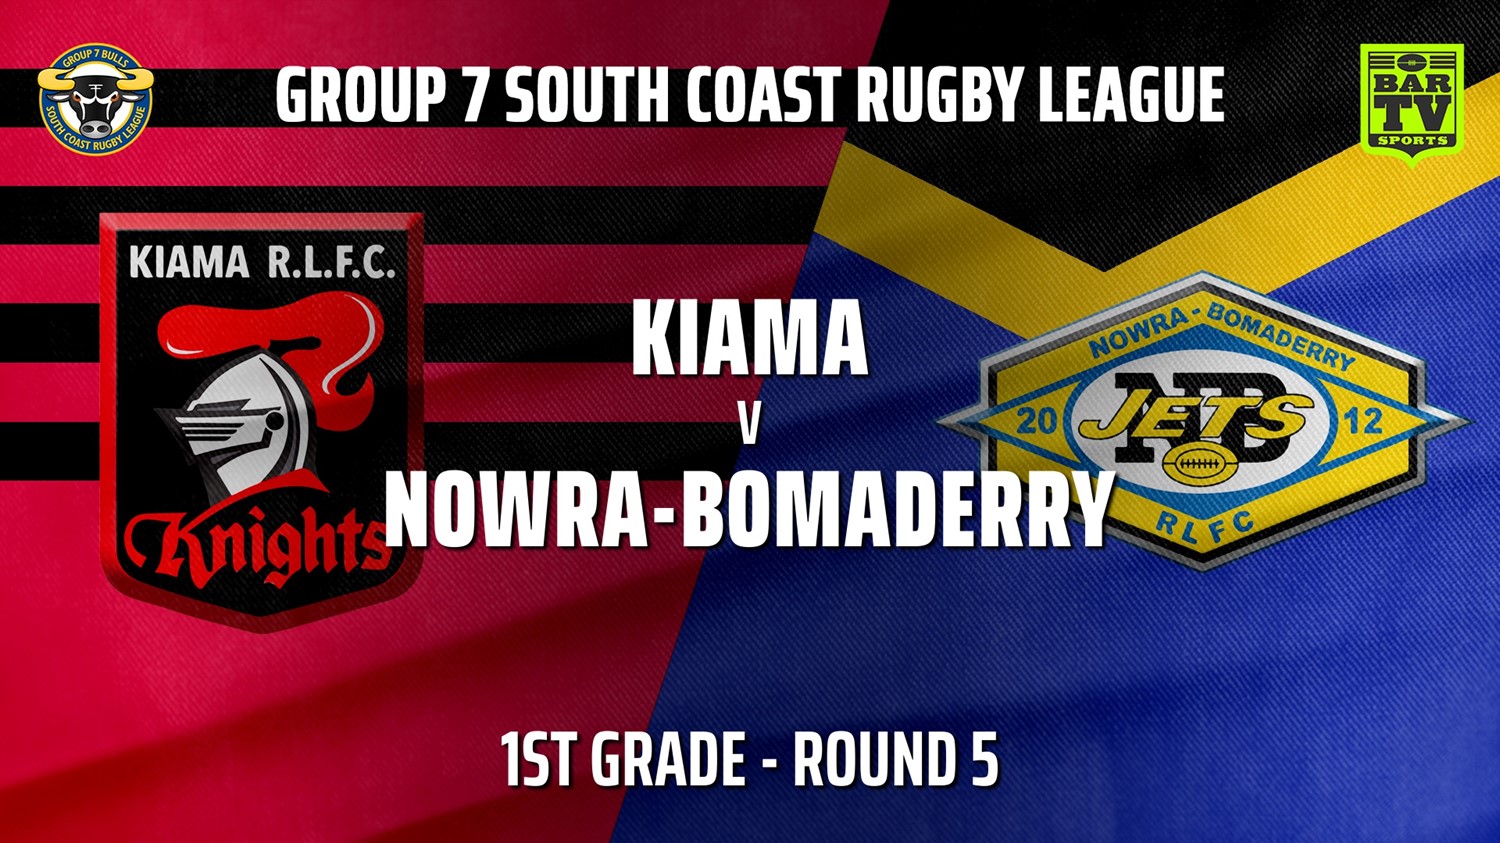 210516-Group 7 RL Round 5 - 1st Grade - Kiama Knights v Nowra-Bomaderry  Slate Image